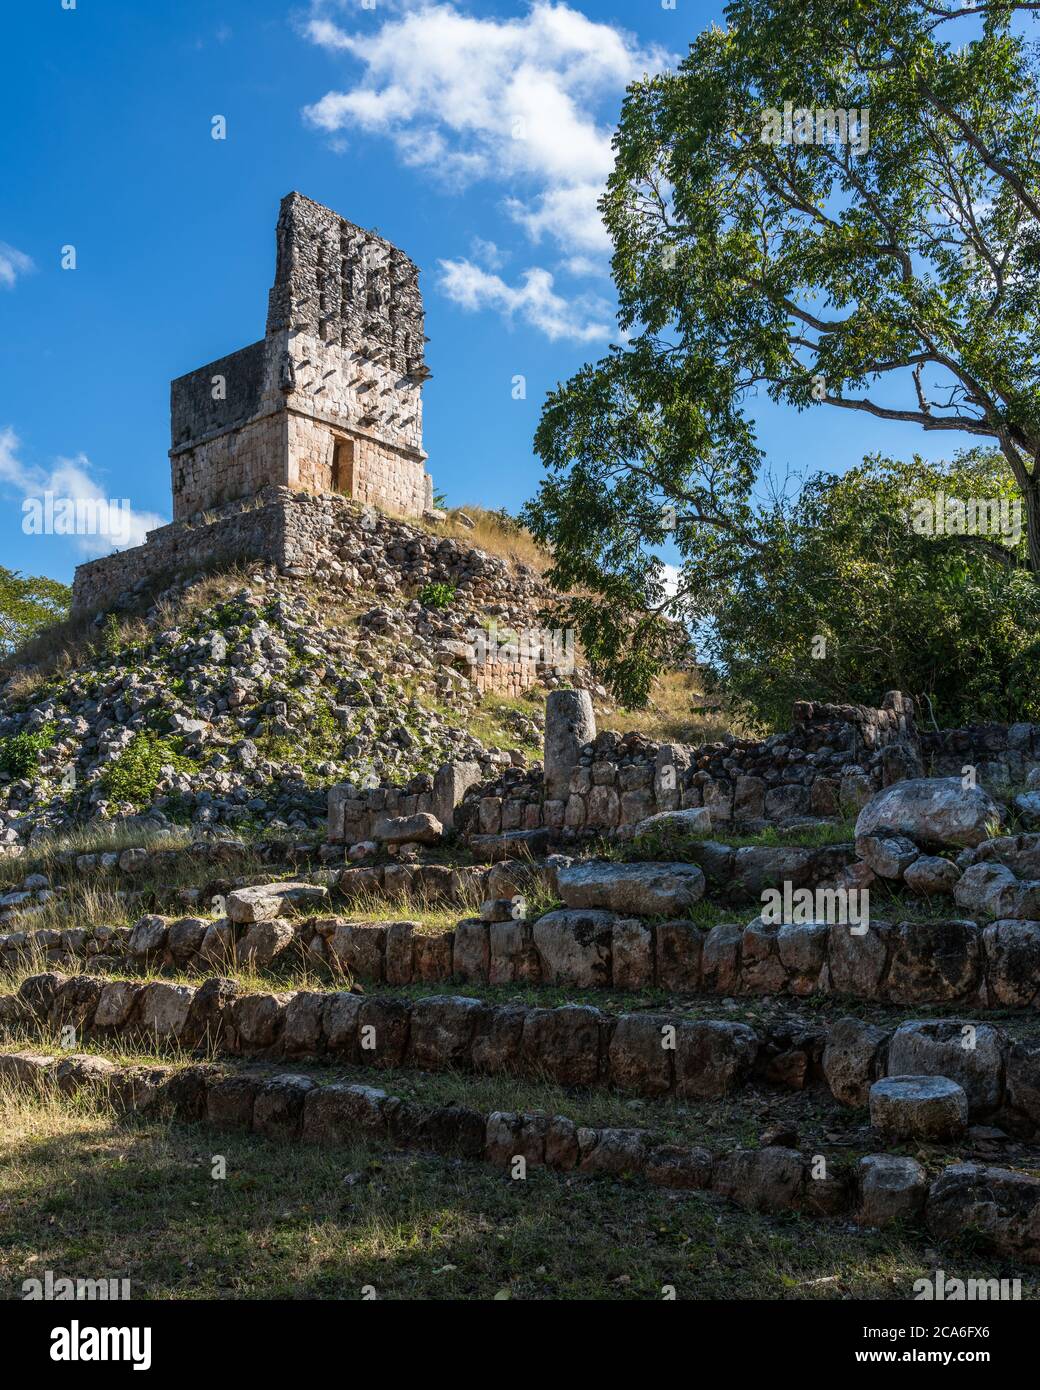 Die Ruinen der Maya-Stadt Labna sind Teil der prähispanischen Stadt Uxmal UNESCO-Weltkulturerbe-Zentrum in Yucatan, Mexiko. Stockfoto